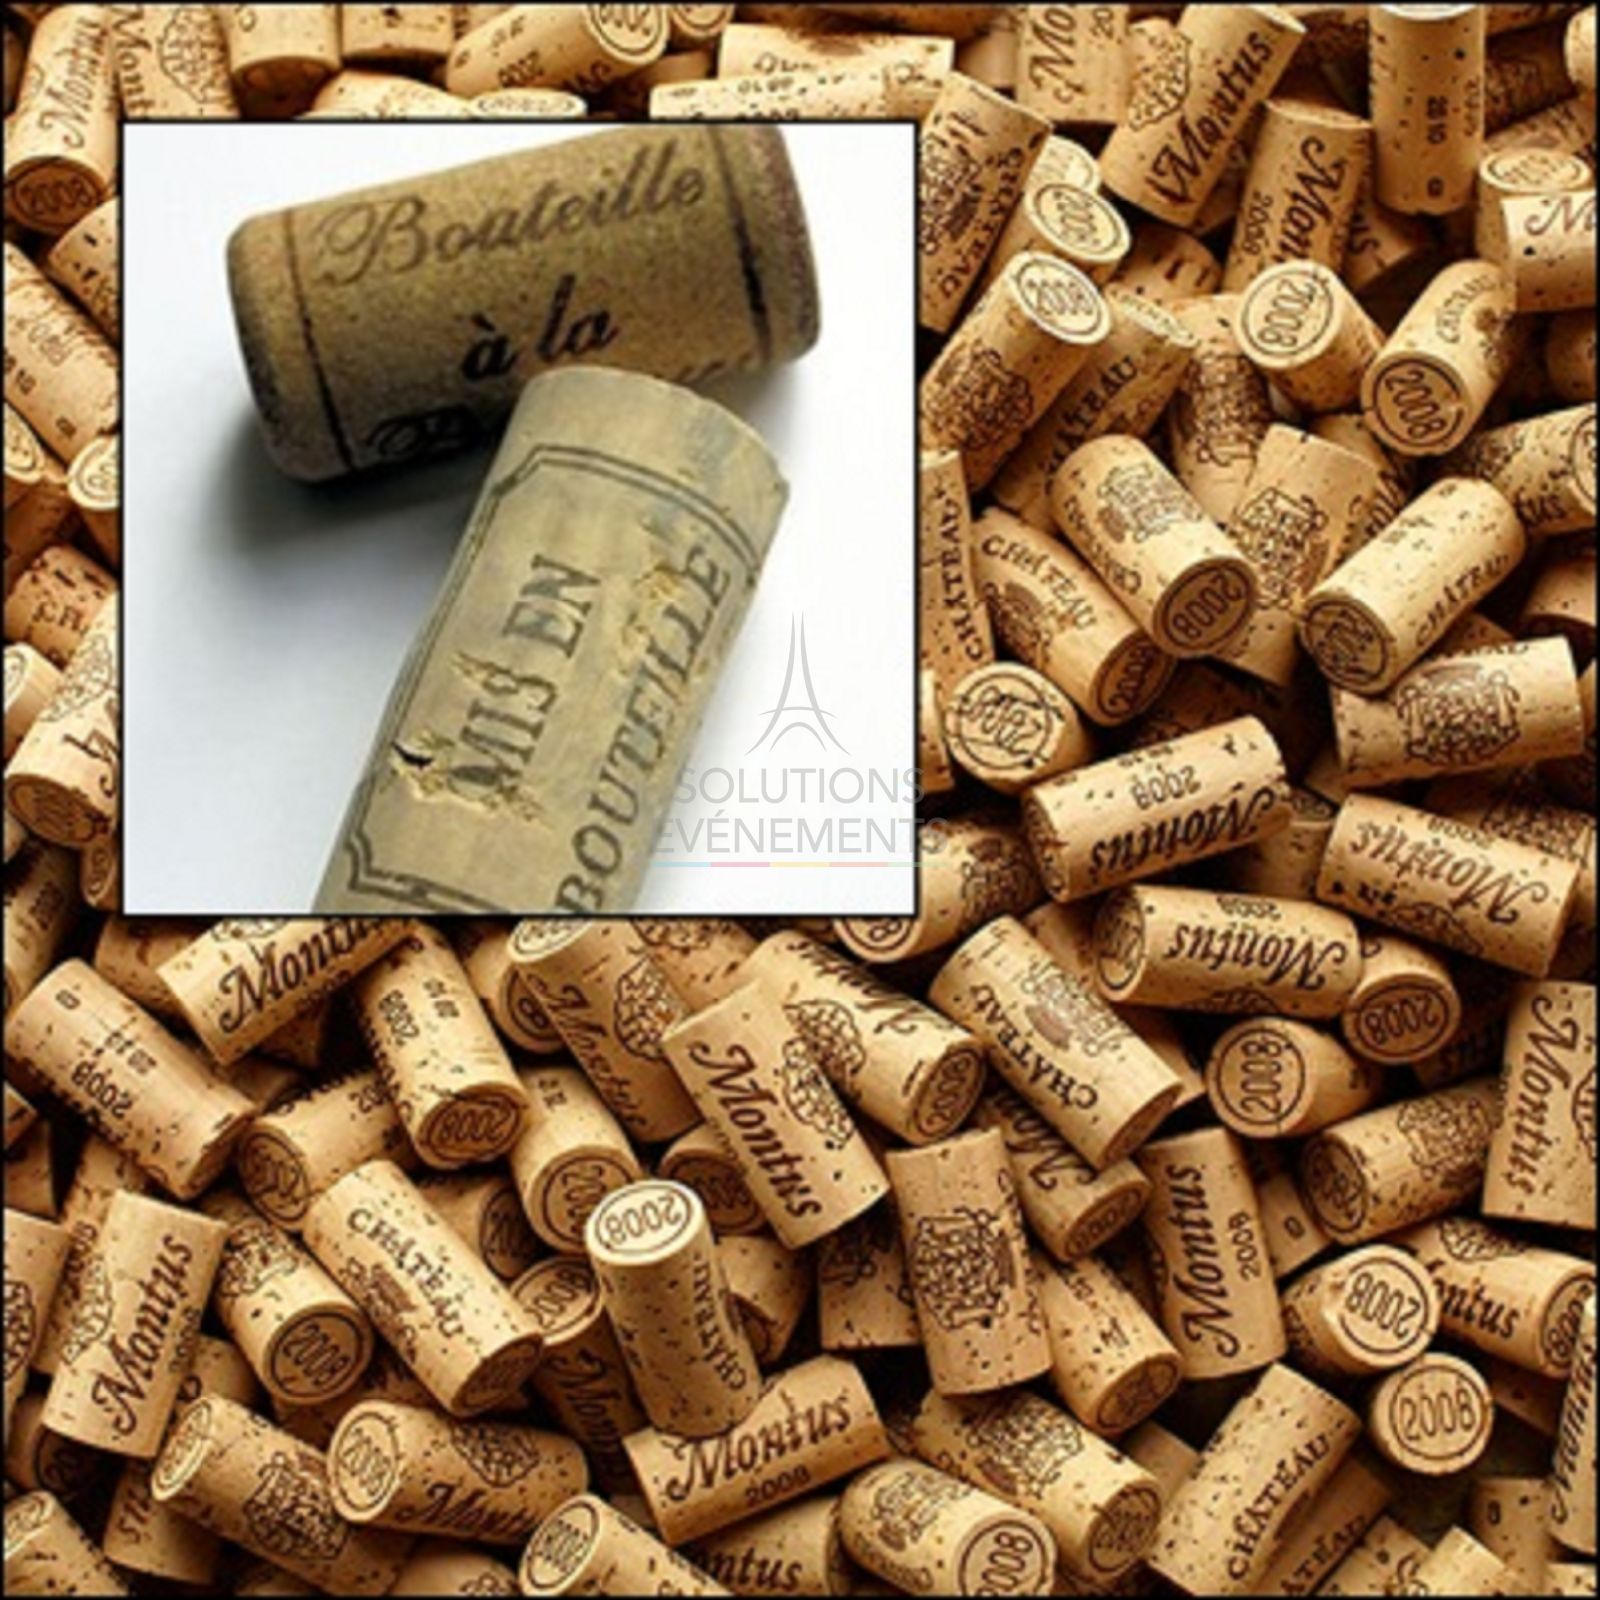 Rental of a batch of 100 corks